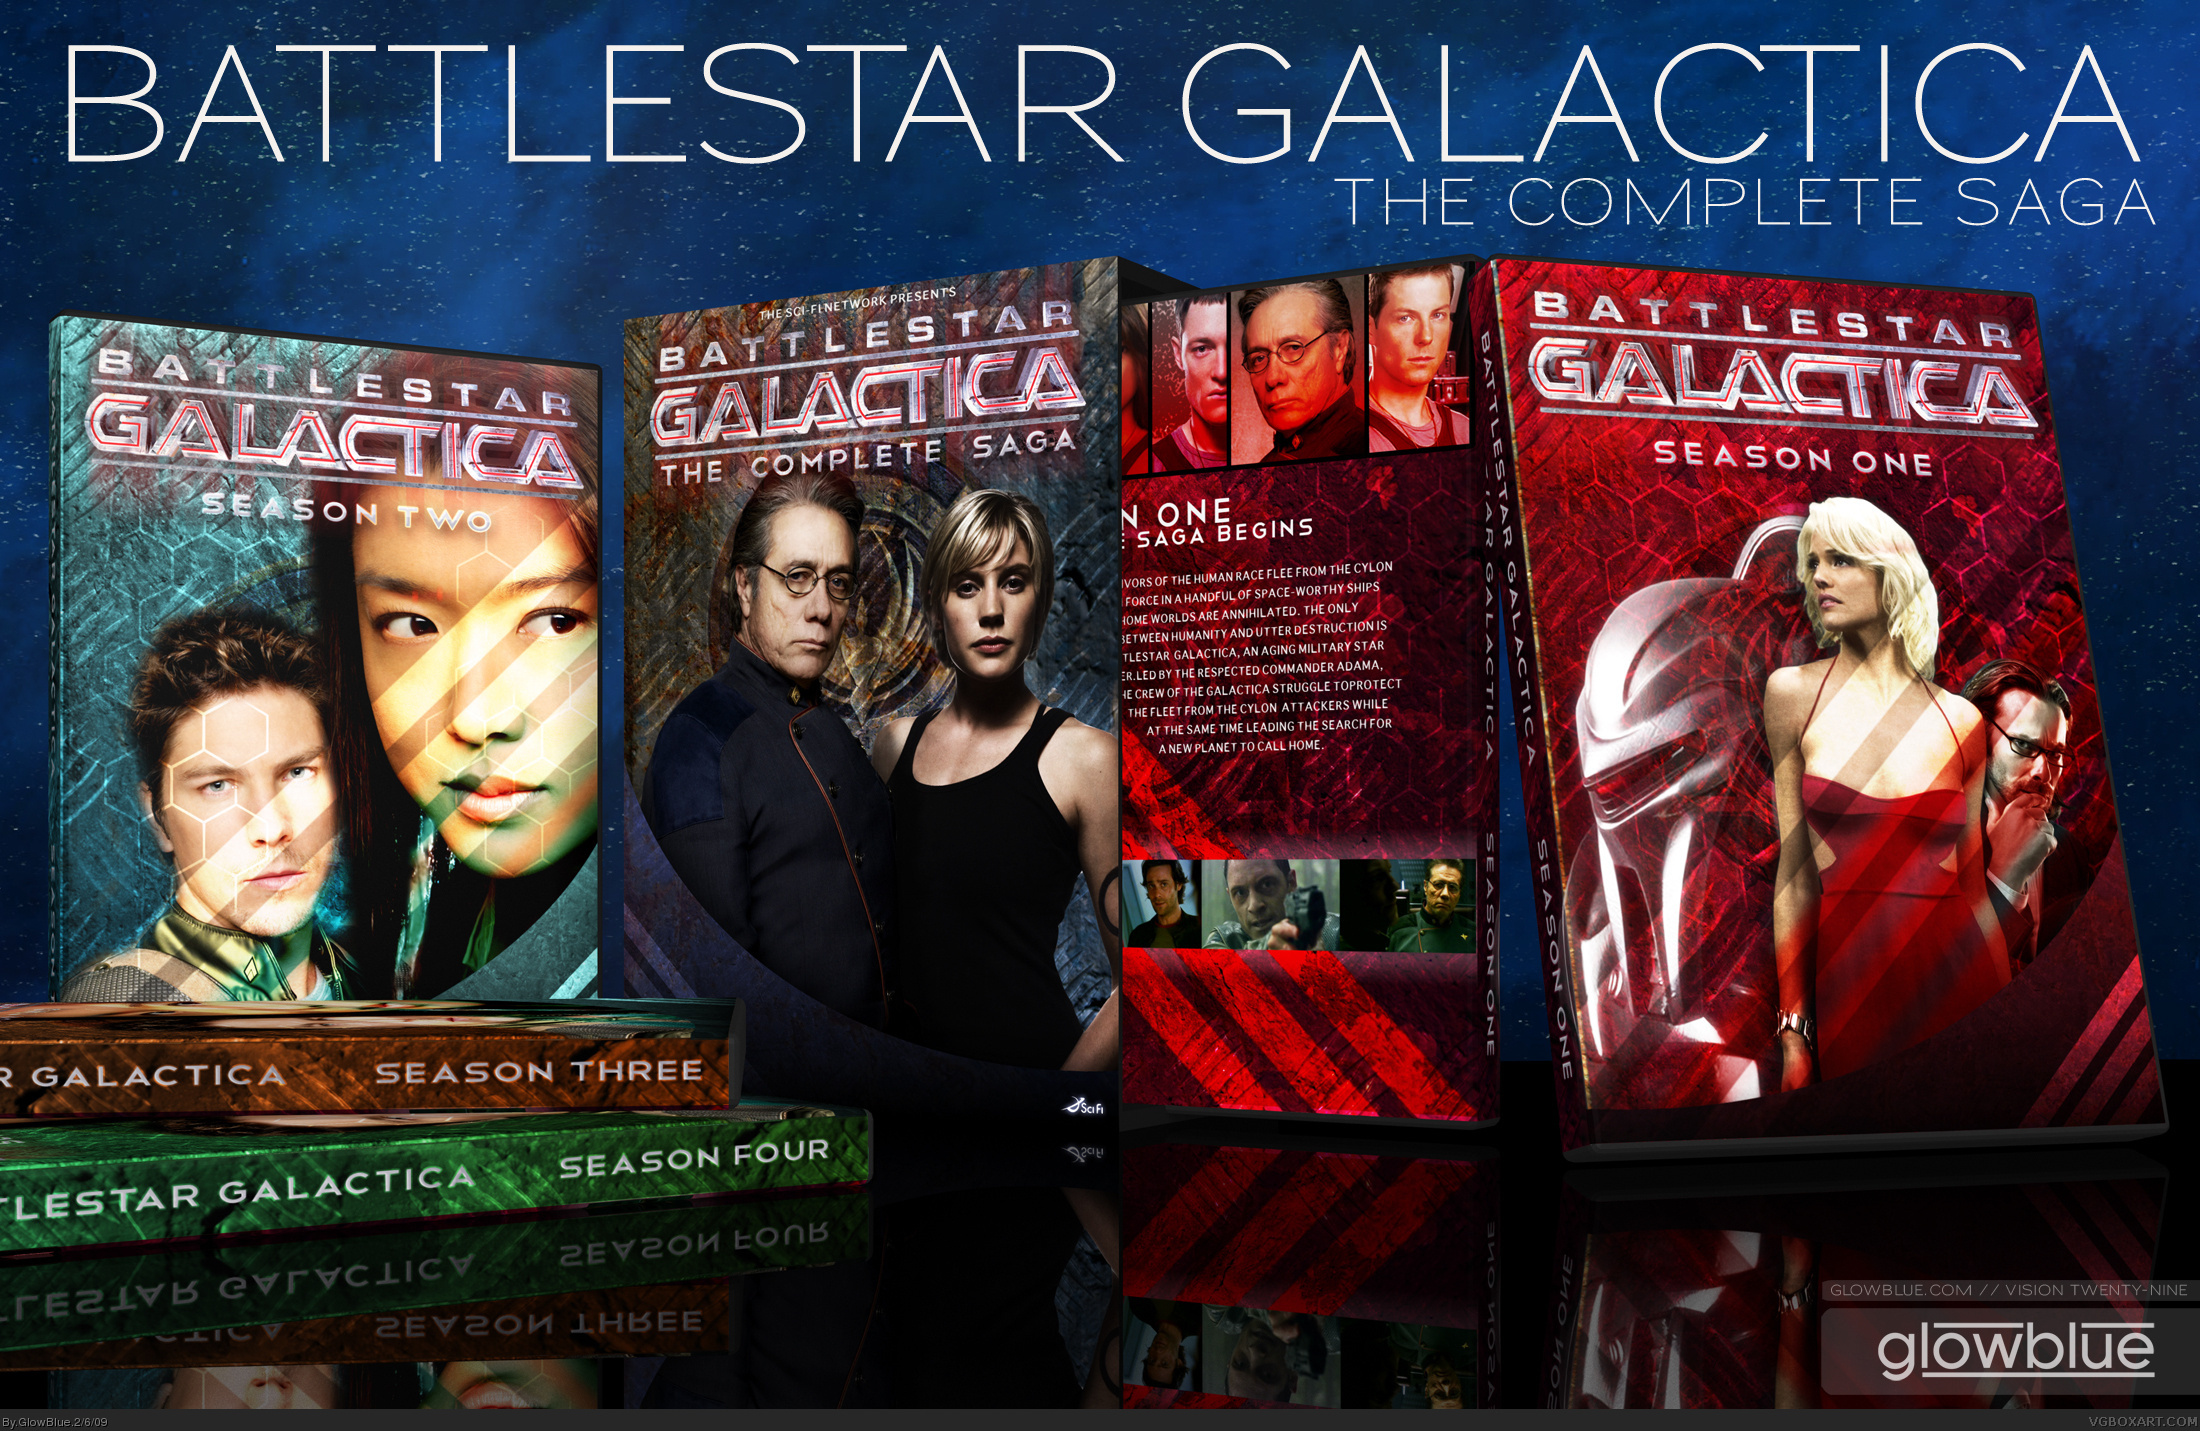 Battlestar Galactica box cover